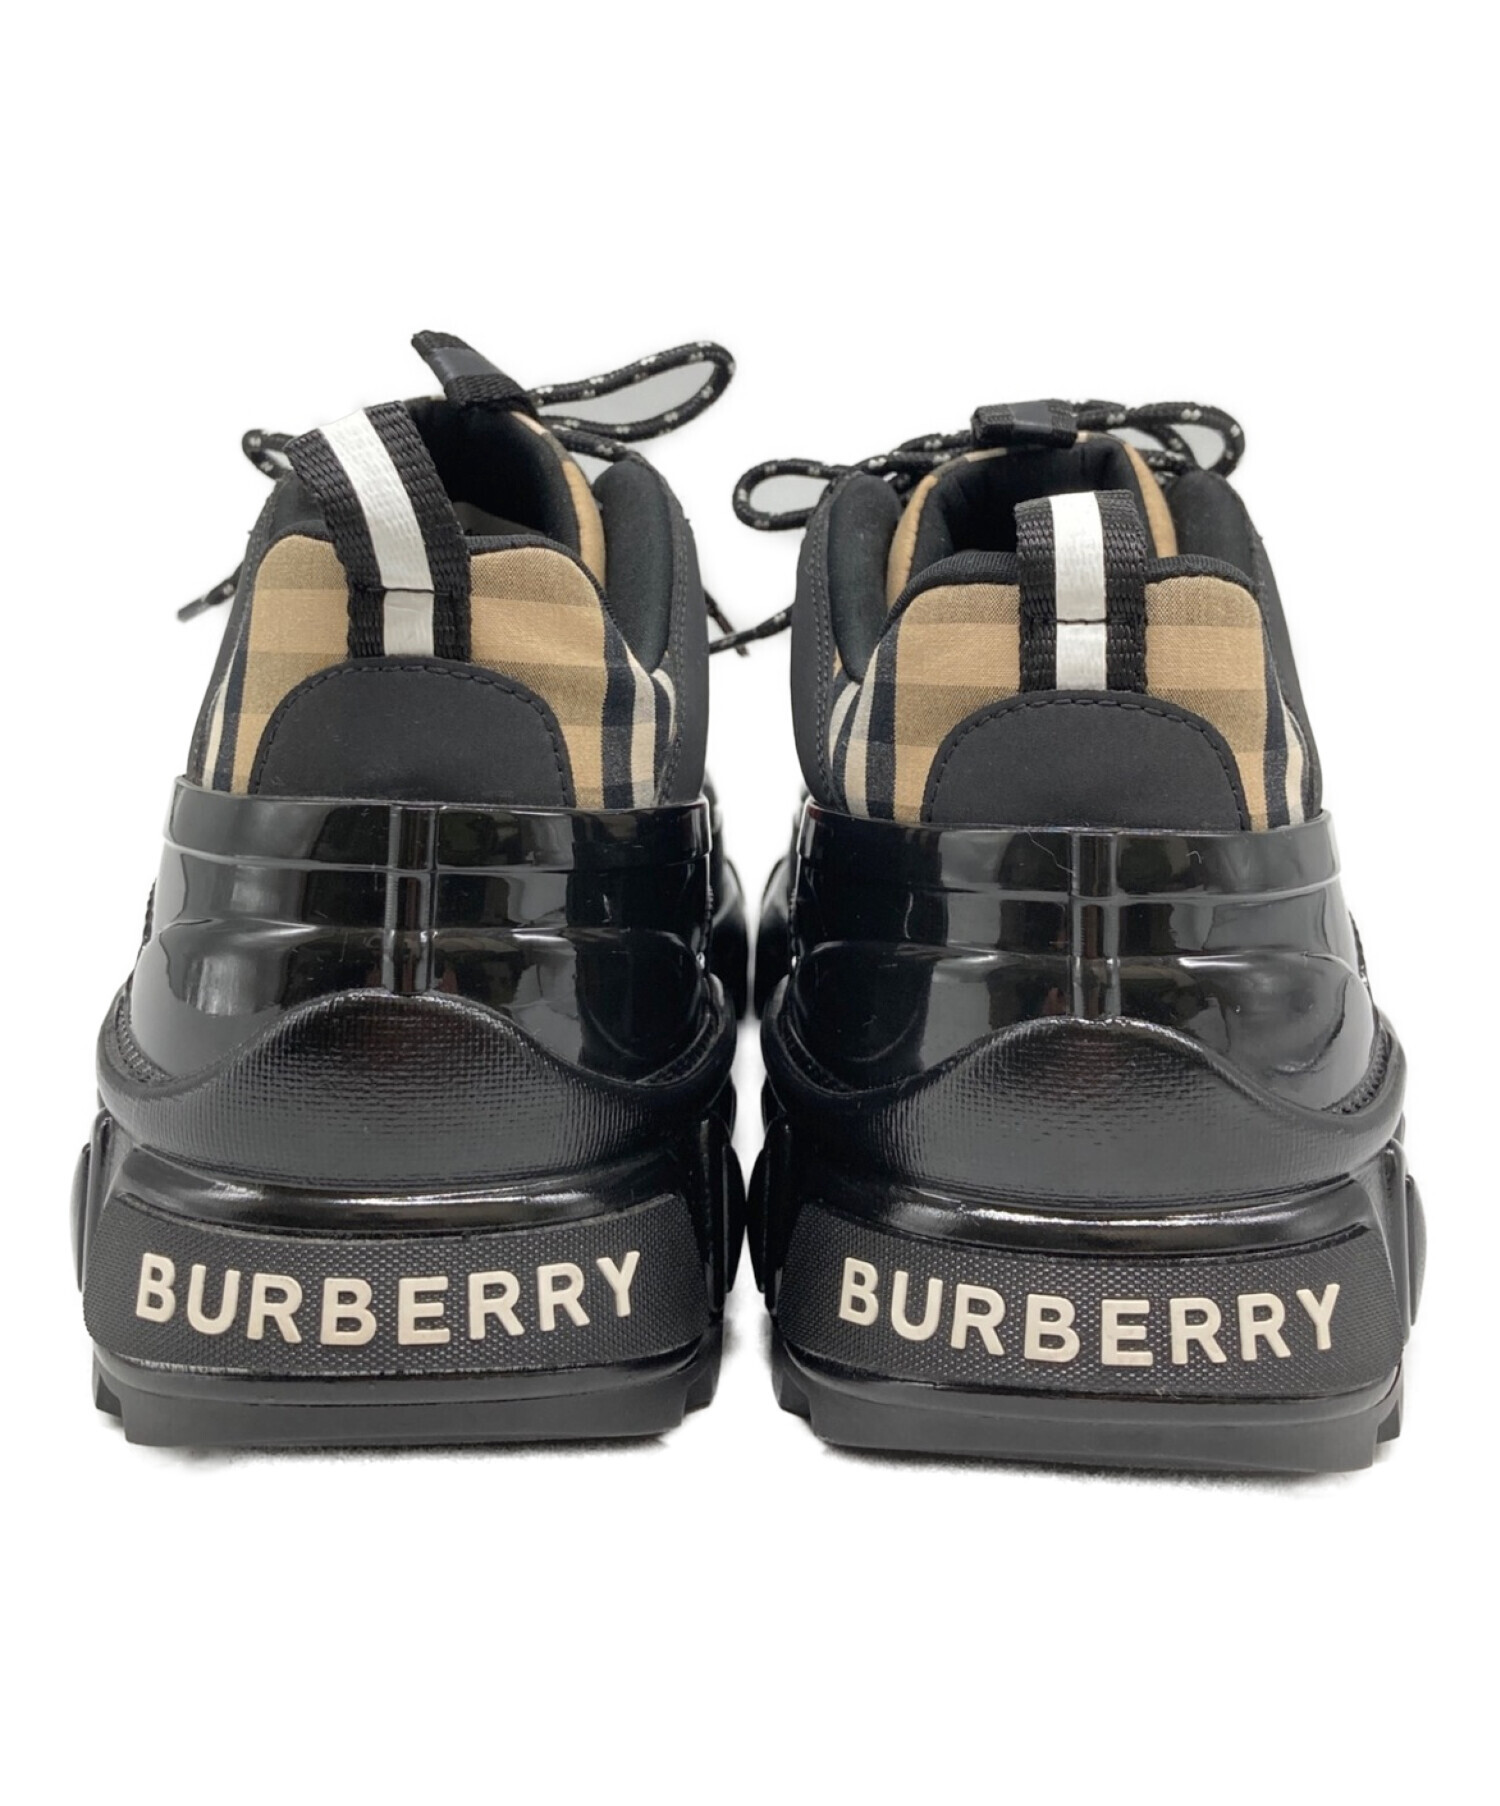 BURBERRY LONDON バーバーリー ロンドン 靴 - ドレス/ビジネス